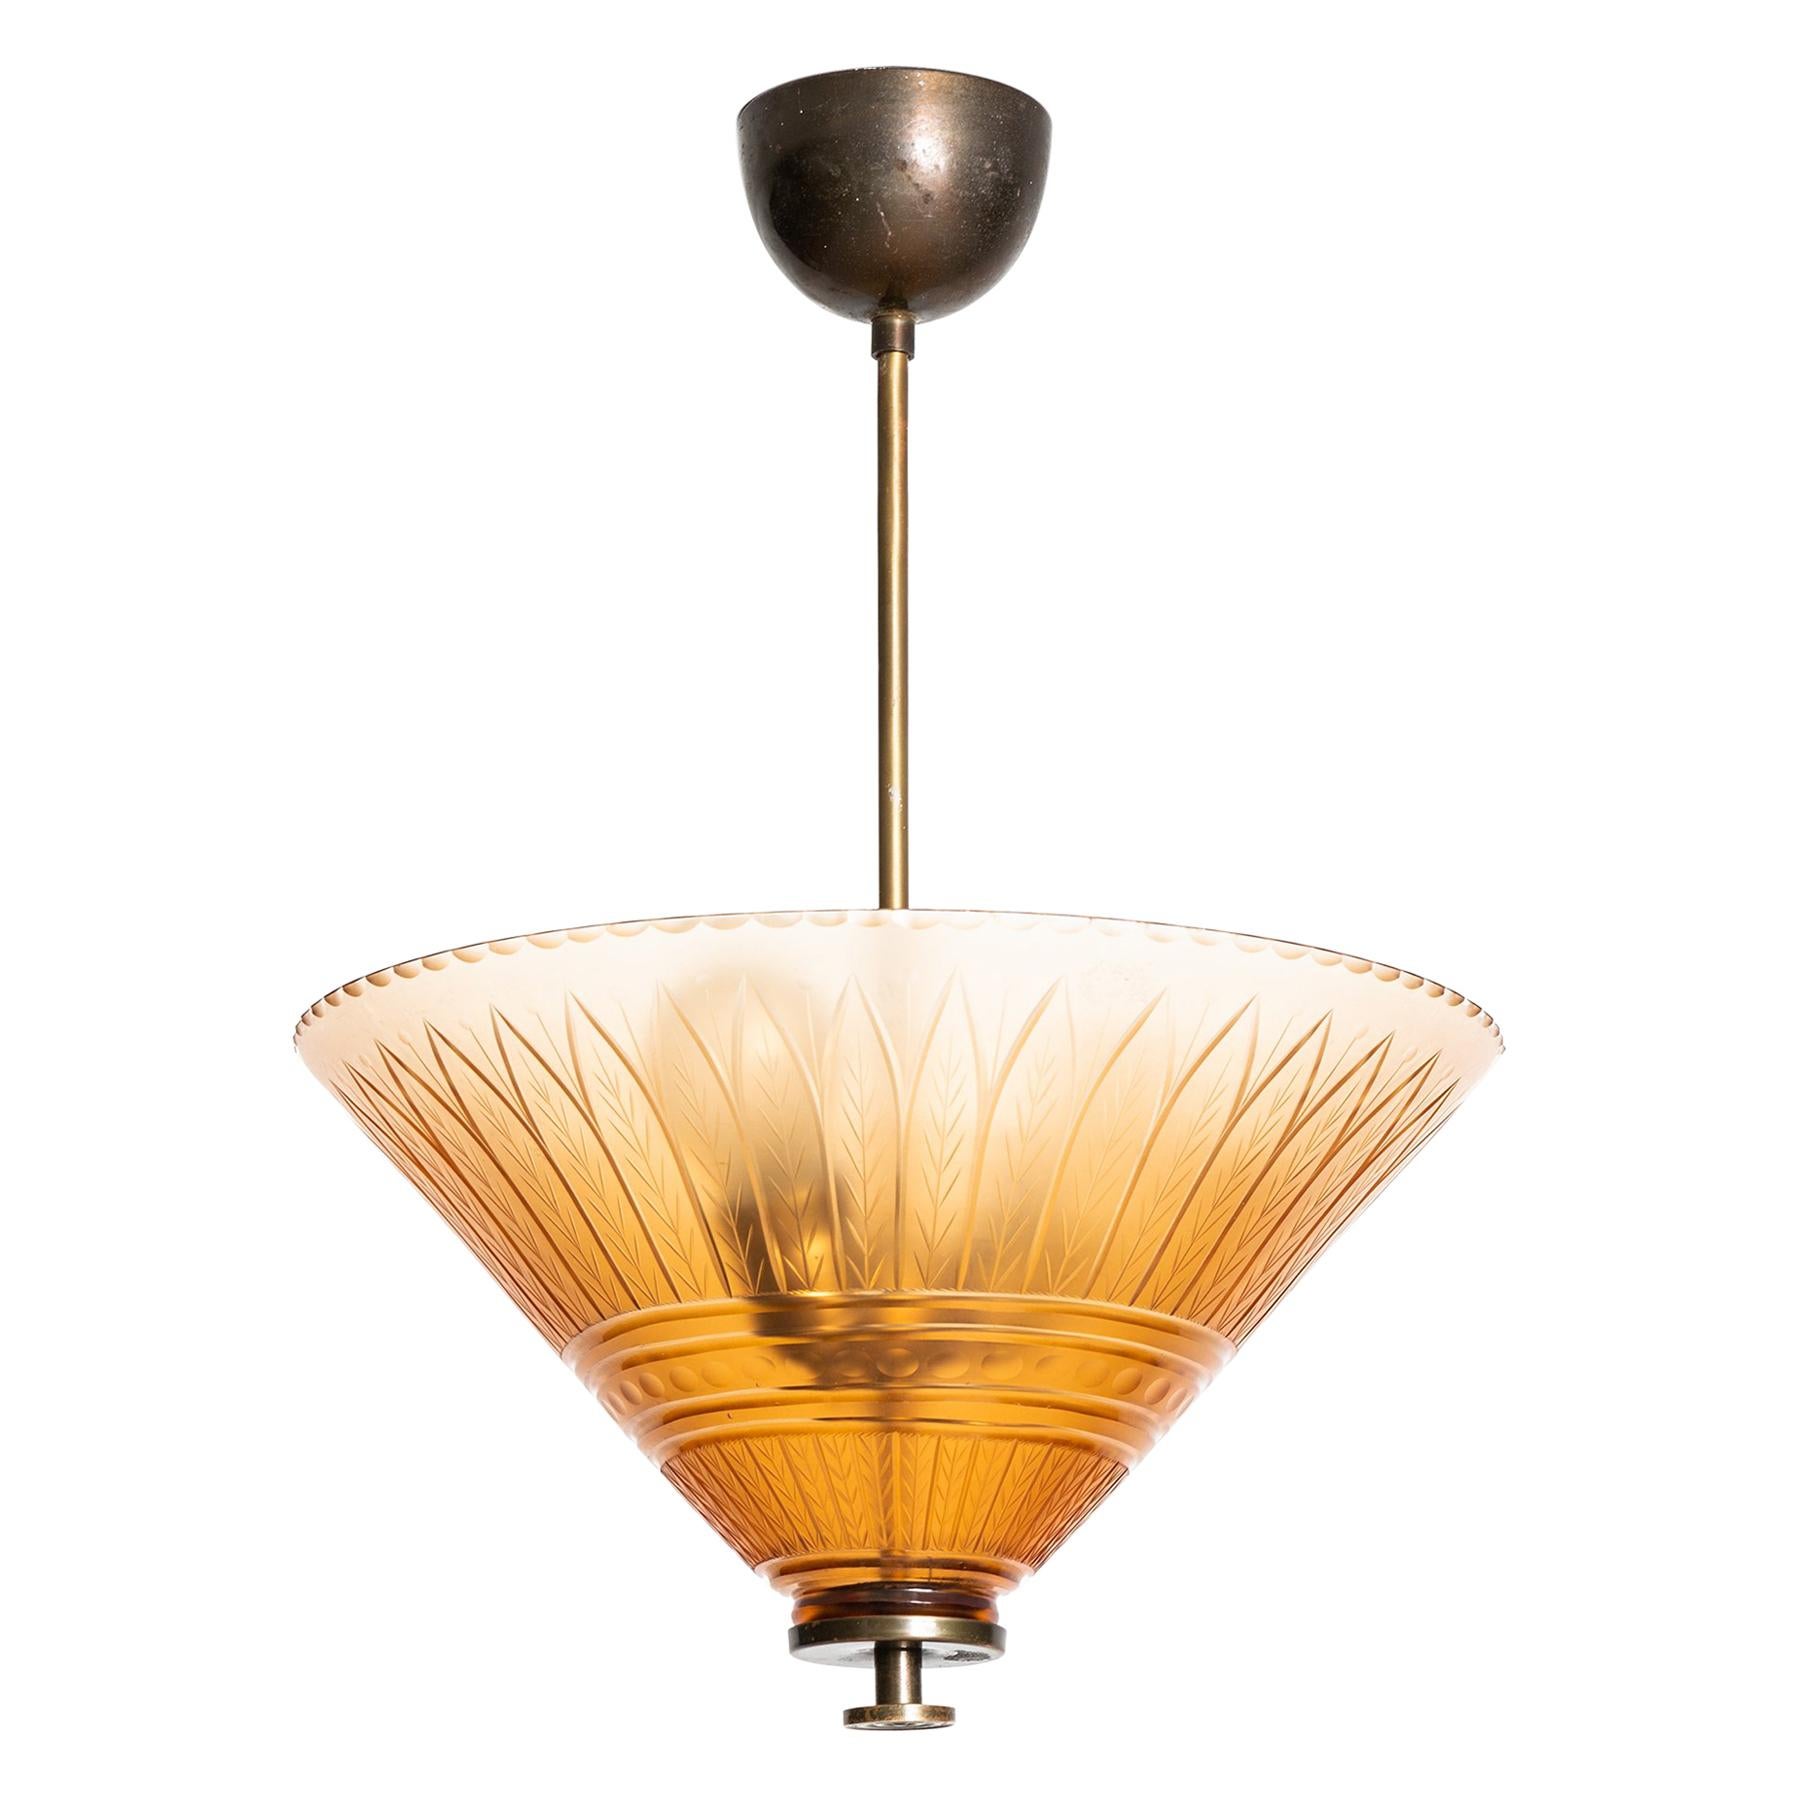 Edward Hald Ceiling Lamp Produced by Orrefors in Sweden